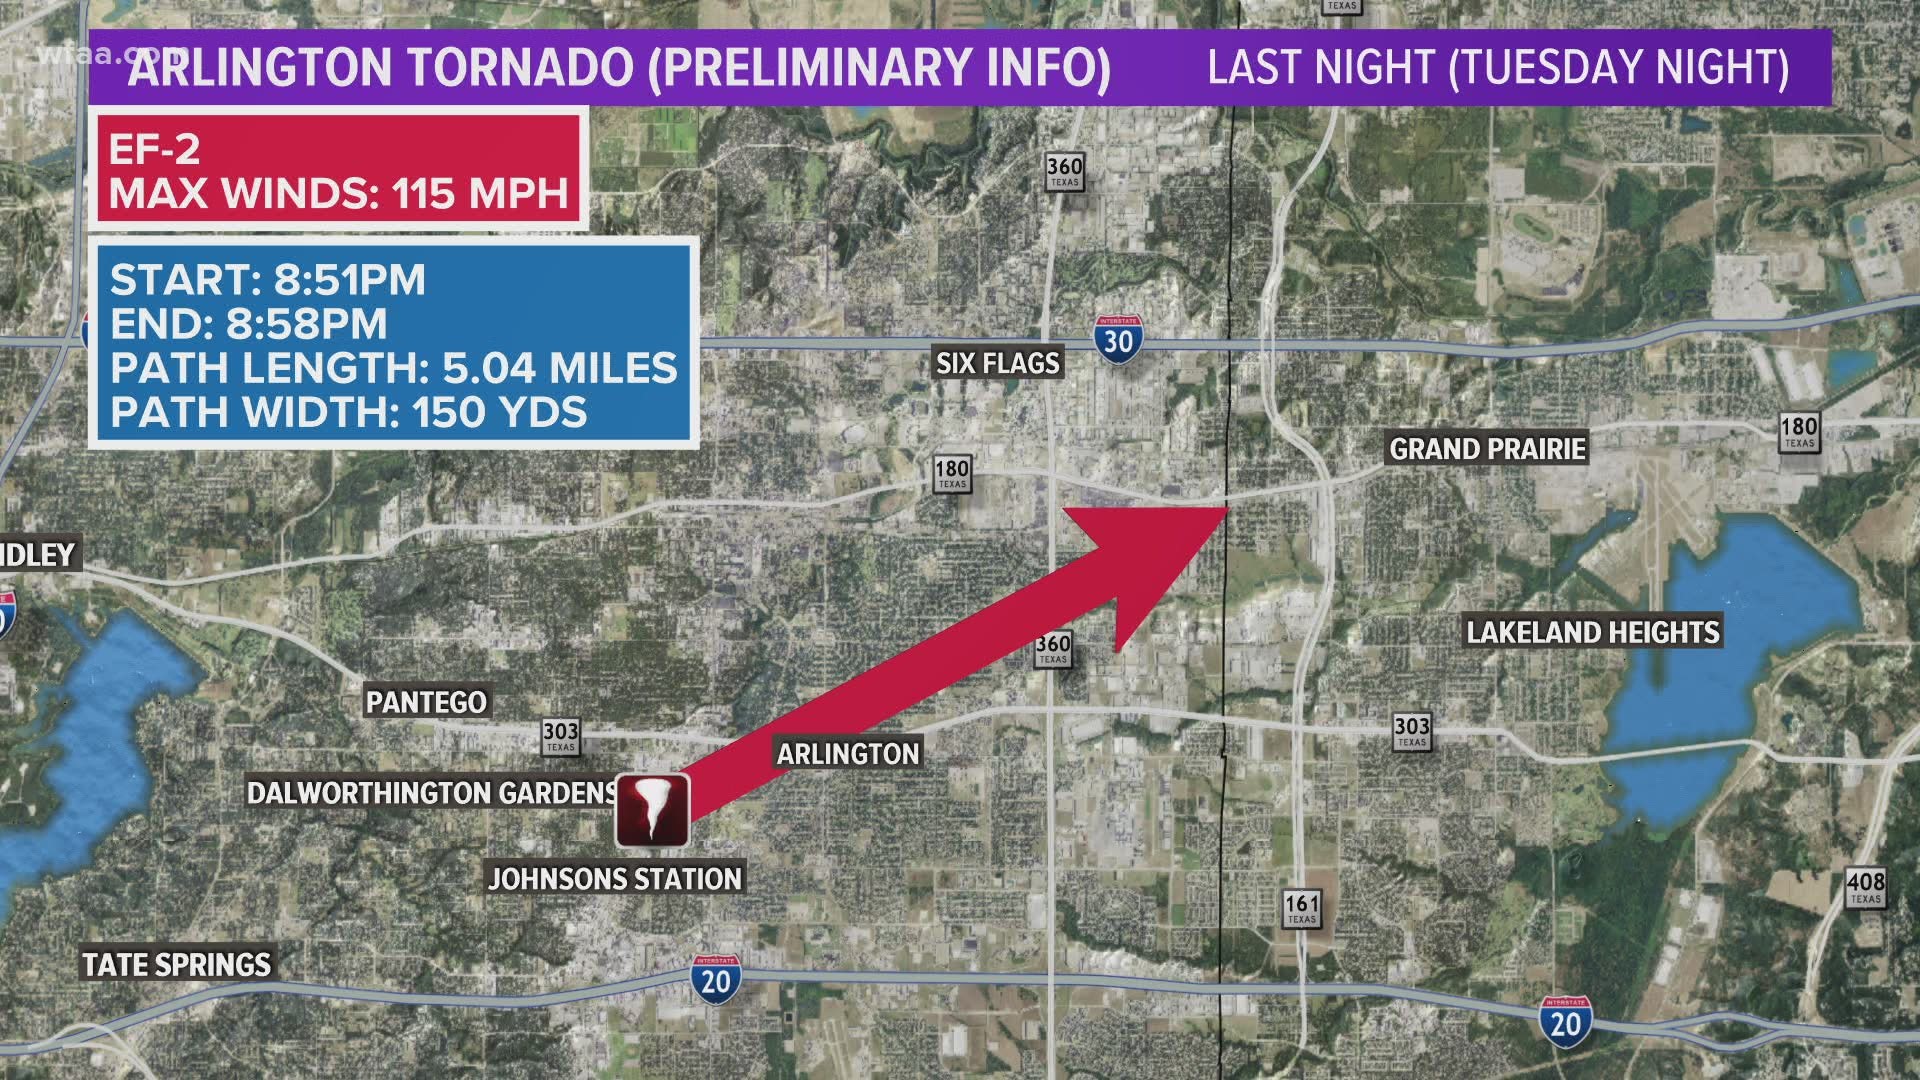 The tornado caused heavy damage in Arlington Tuesday night.